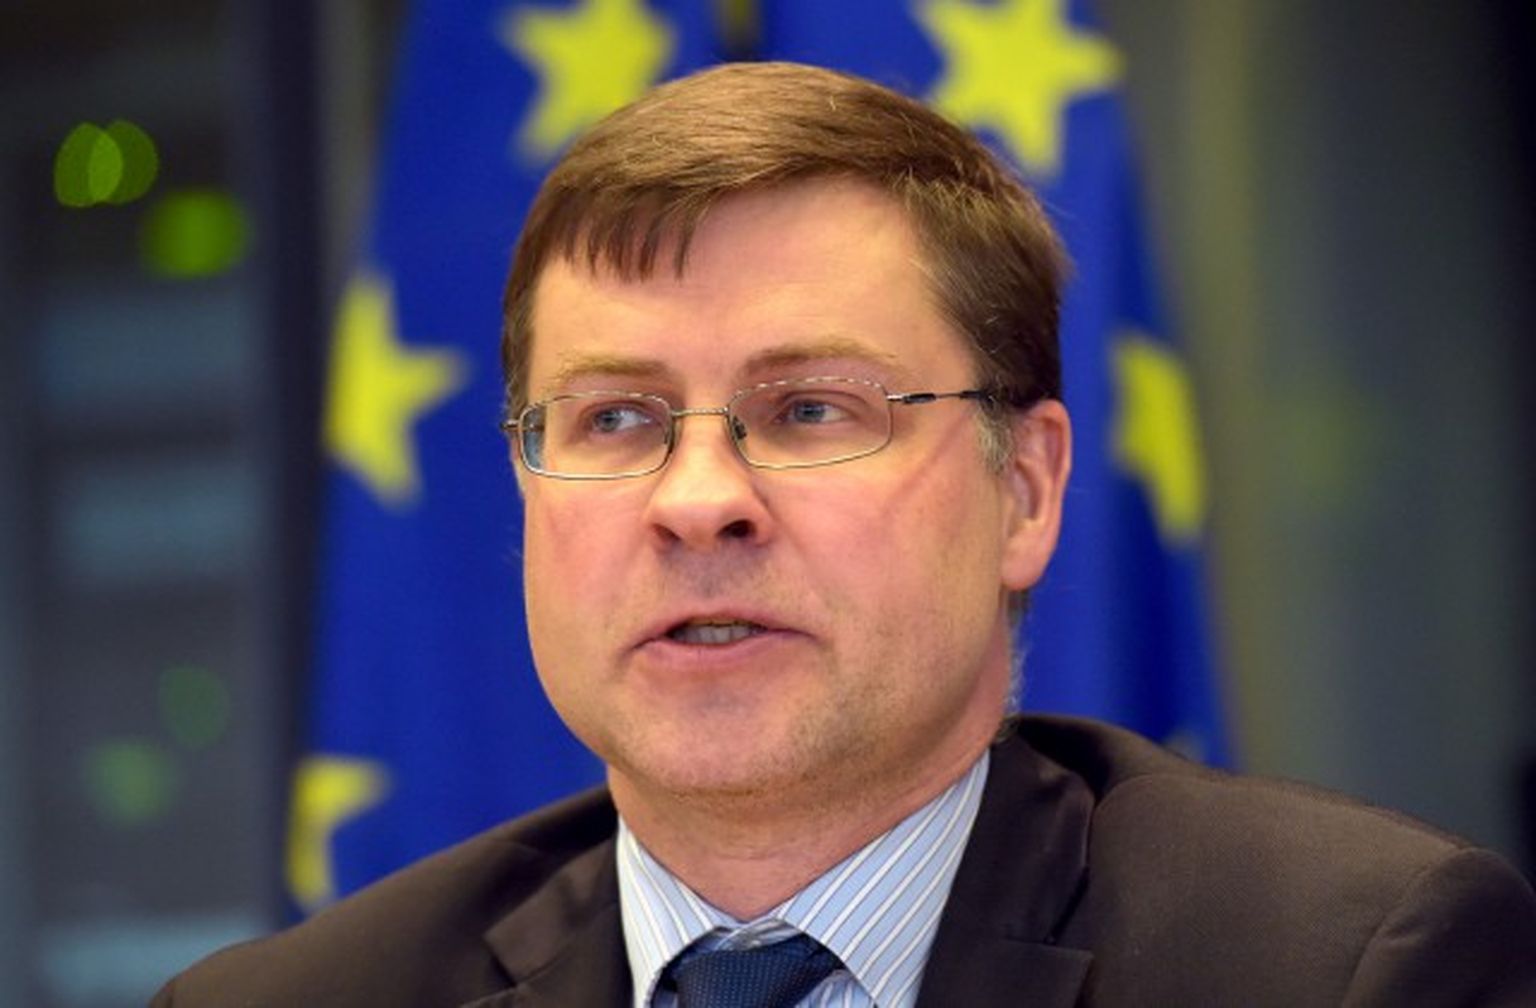 Eiropas Komisijas (EK) viceprezidents eiro un sociālā dialoga jautājumos Valdis Dombrovskis